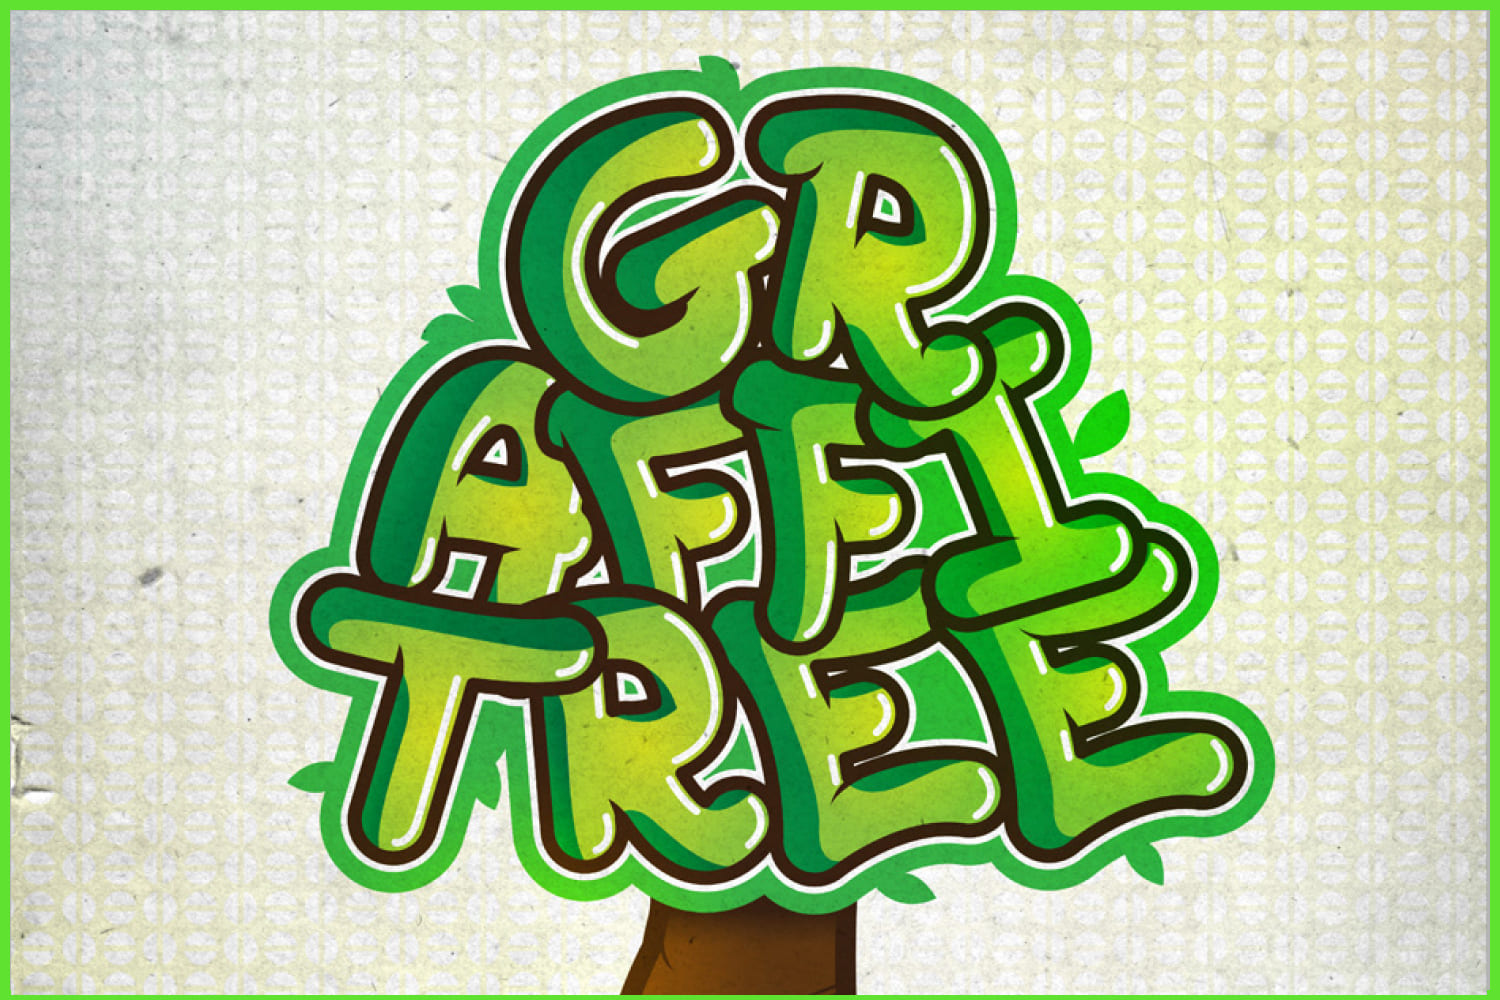 Green word Graffiti in tree crown style.